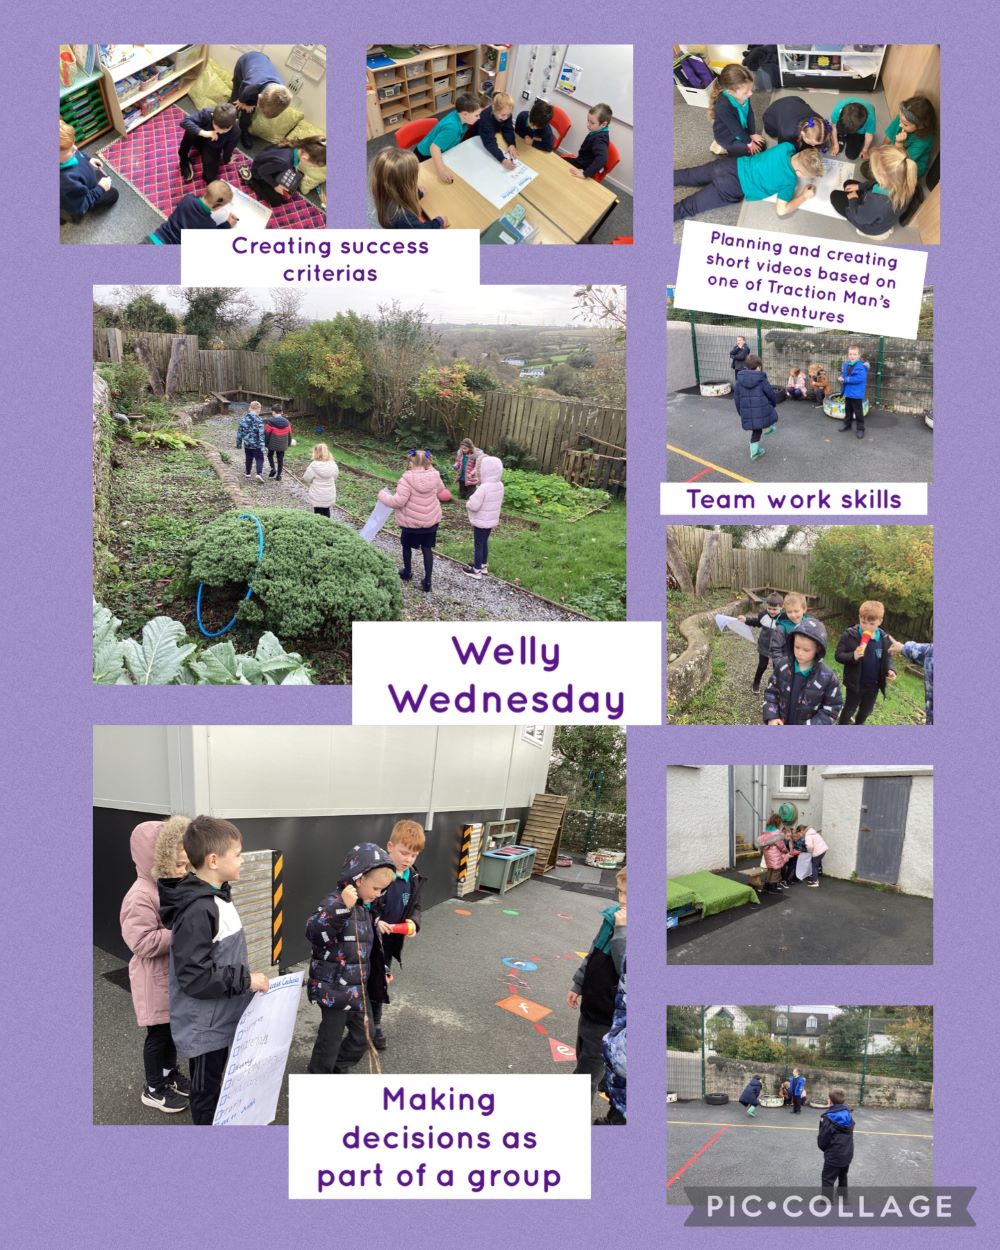 Welly Wednesday